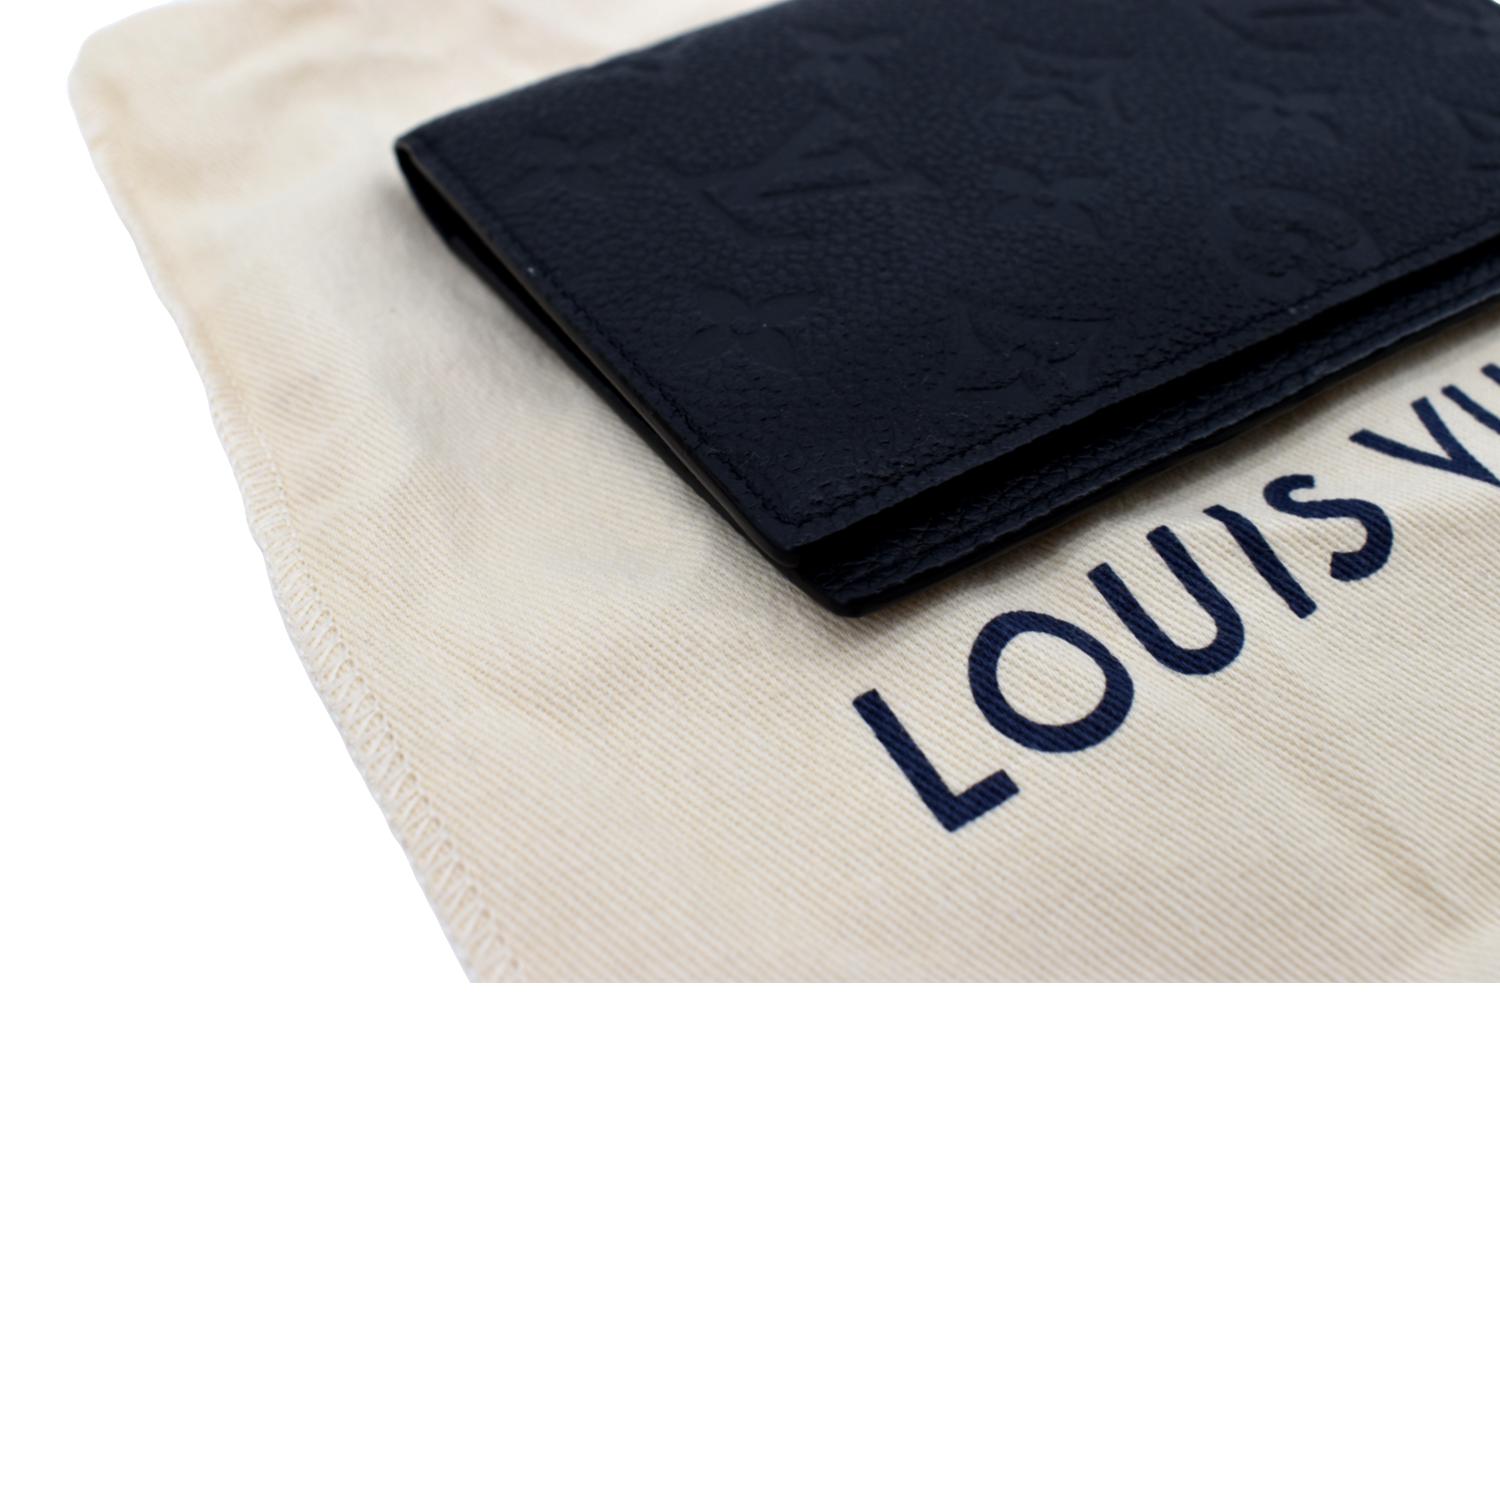 Louis Vuitton Passport Cover Black Monogram Empreinte